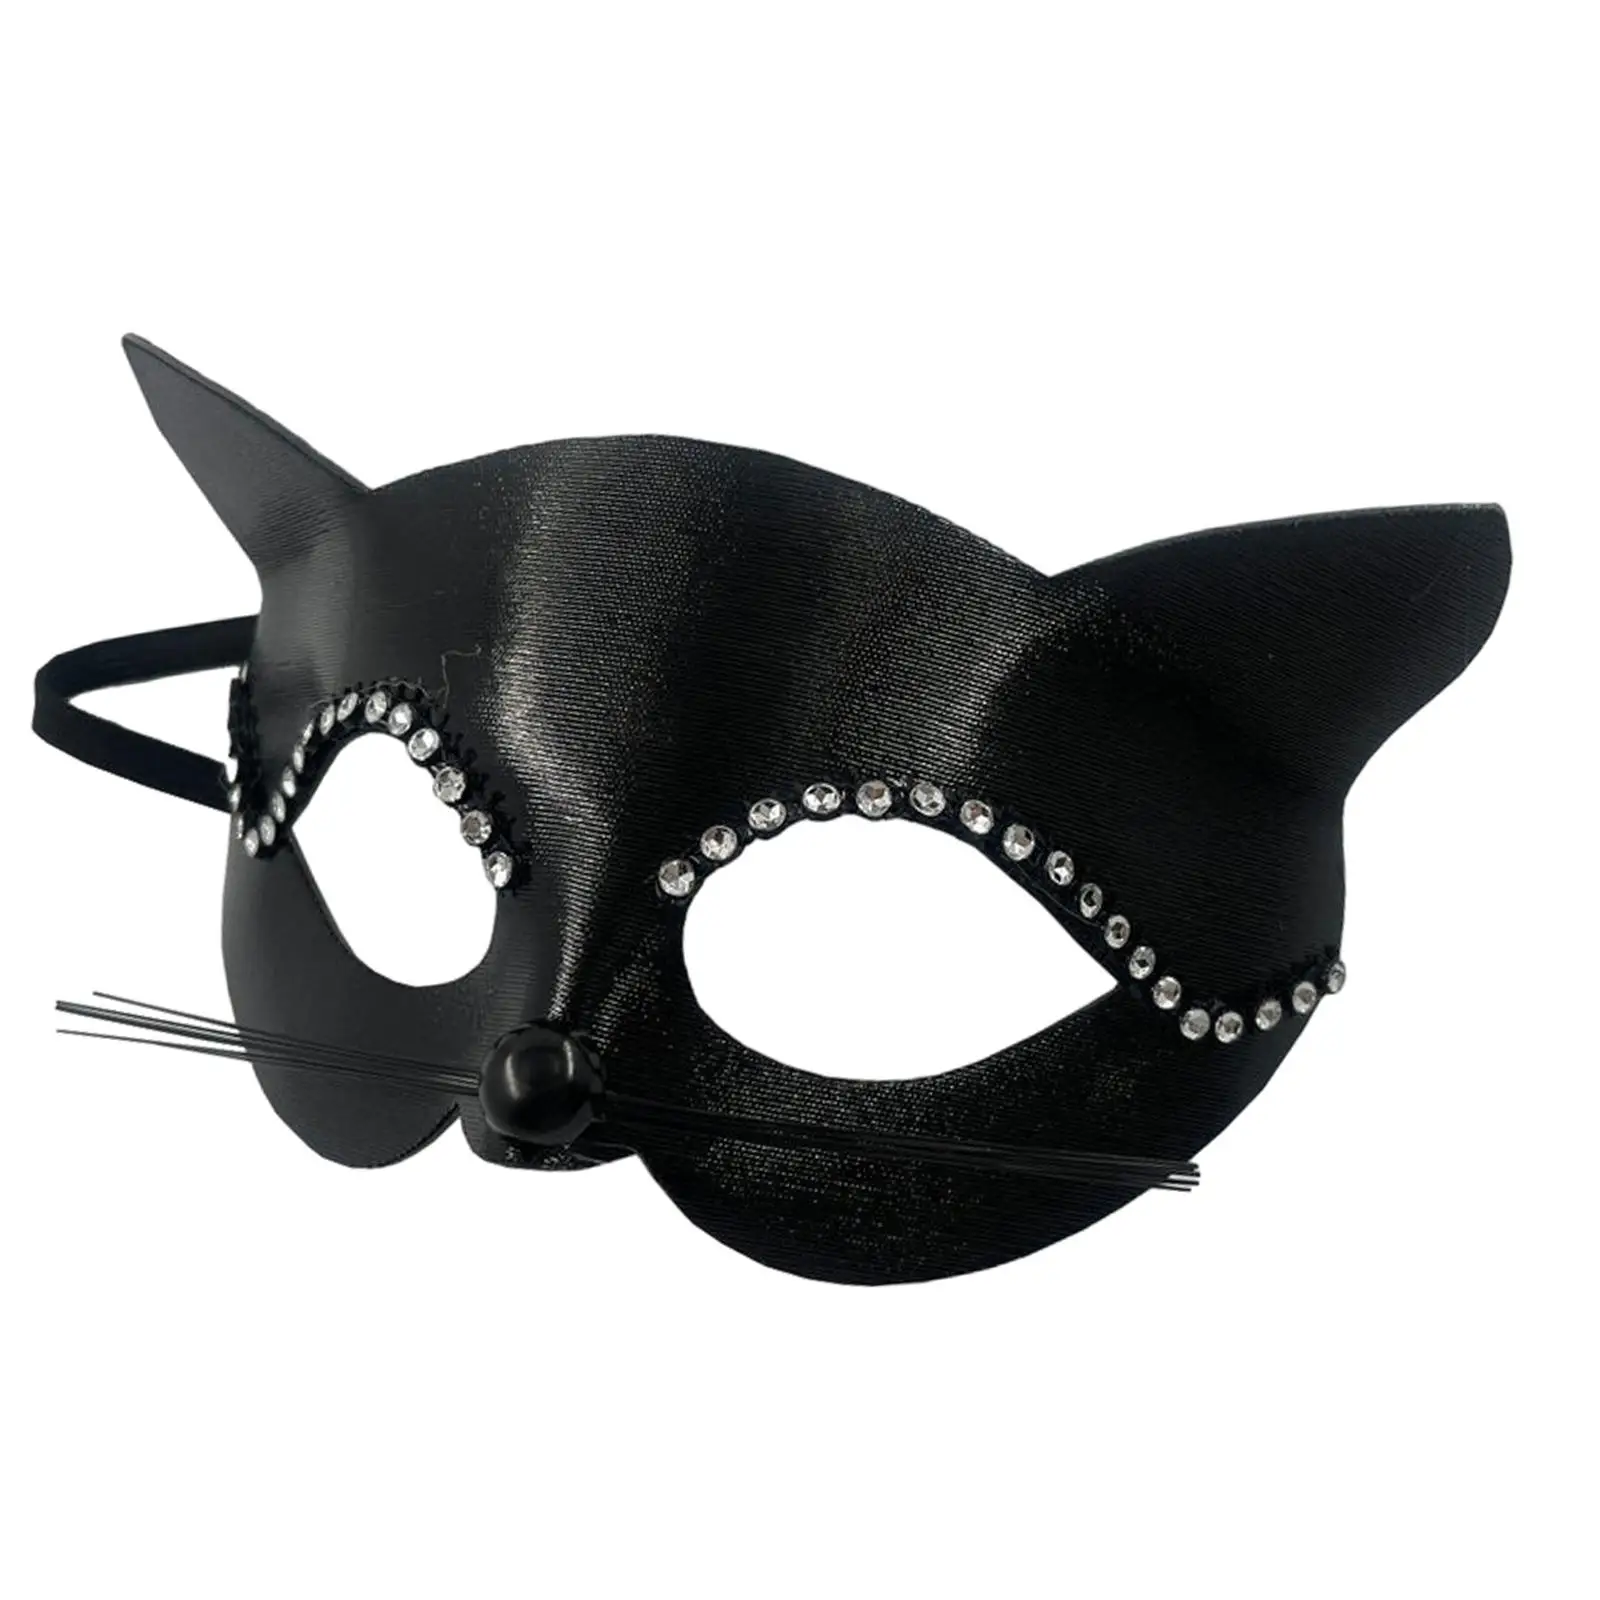 Mulher Gato Preto Máscara de Metade do Rosto de Máscara para Cosplay Fantasia Vestido de Noite Club